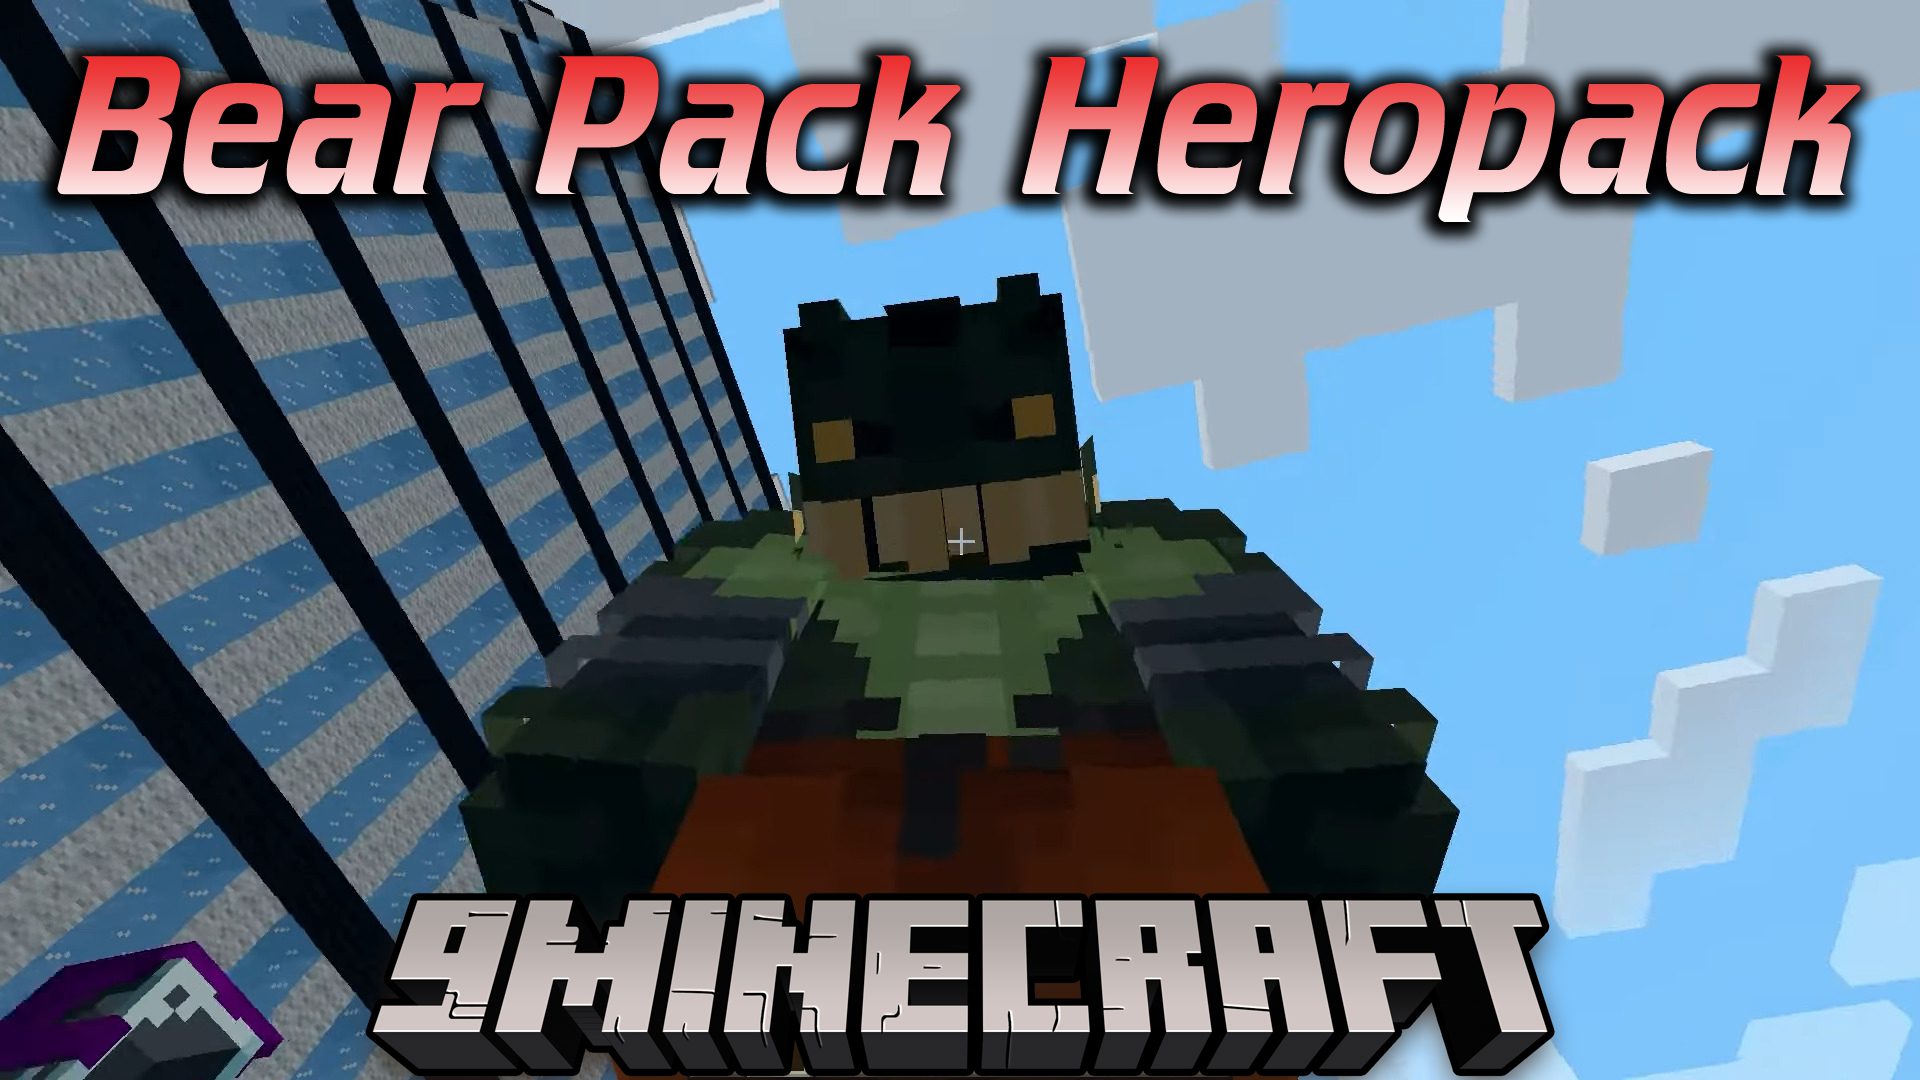 Bear Pack Heropack Mod (1.7.10) – Villain Character Suits 1